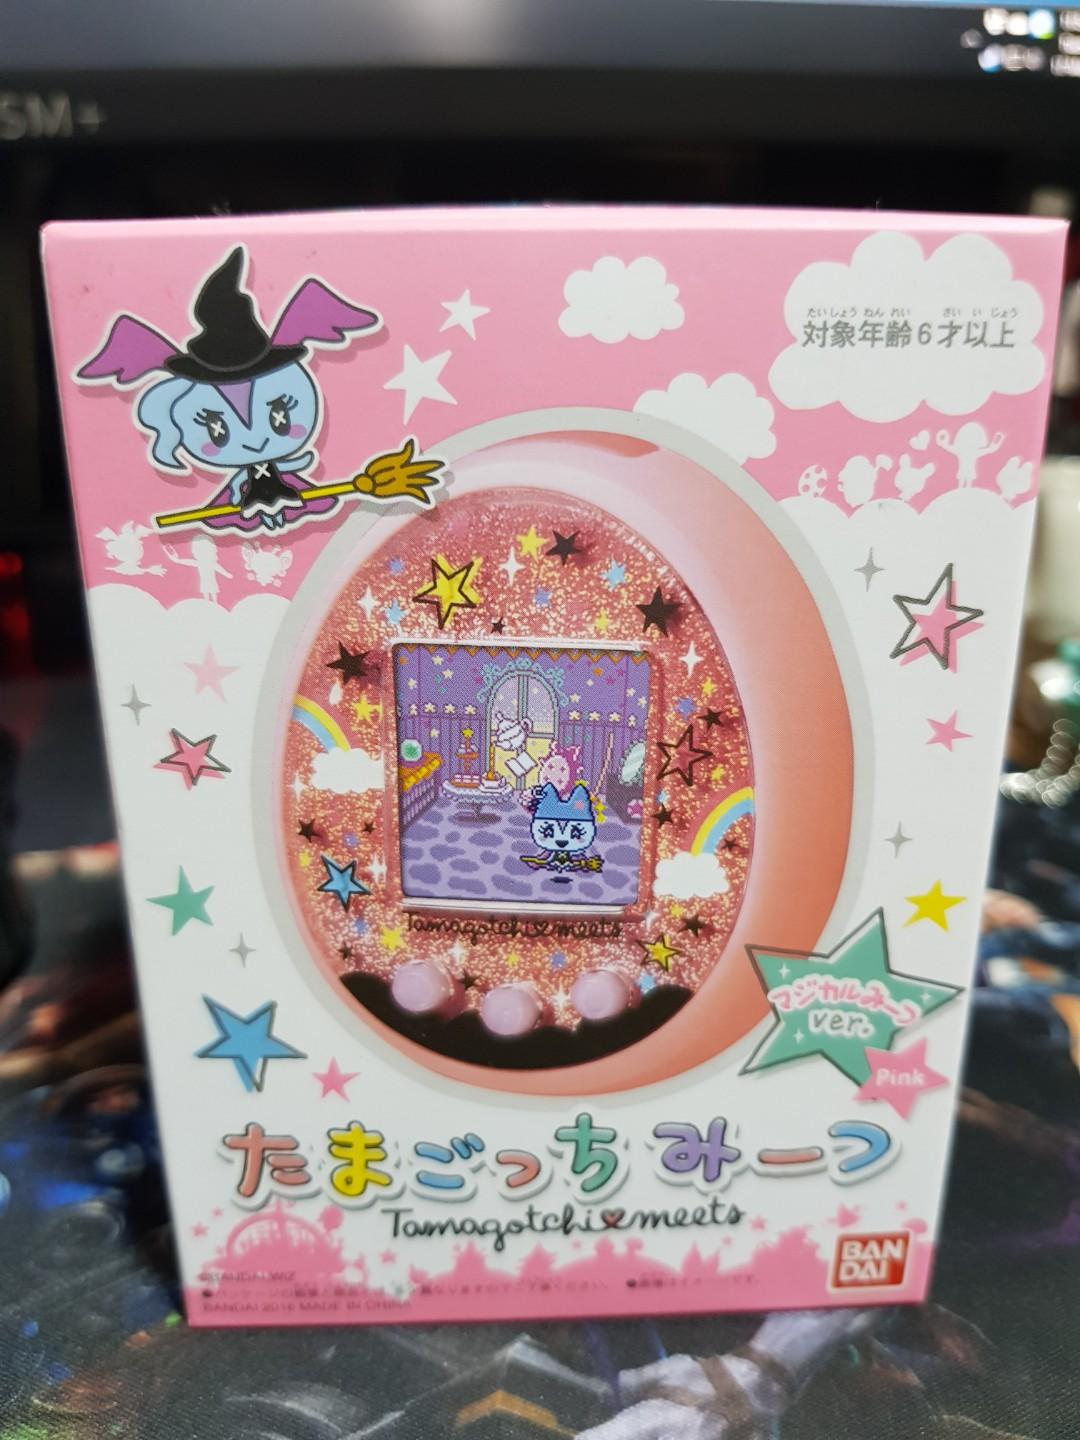 Tamagotchi Game Magical Meets Ver Pink 314219 Bandai Digital Pet From Japan for sale online 